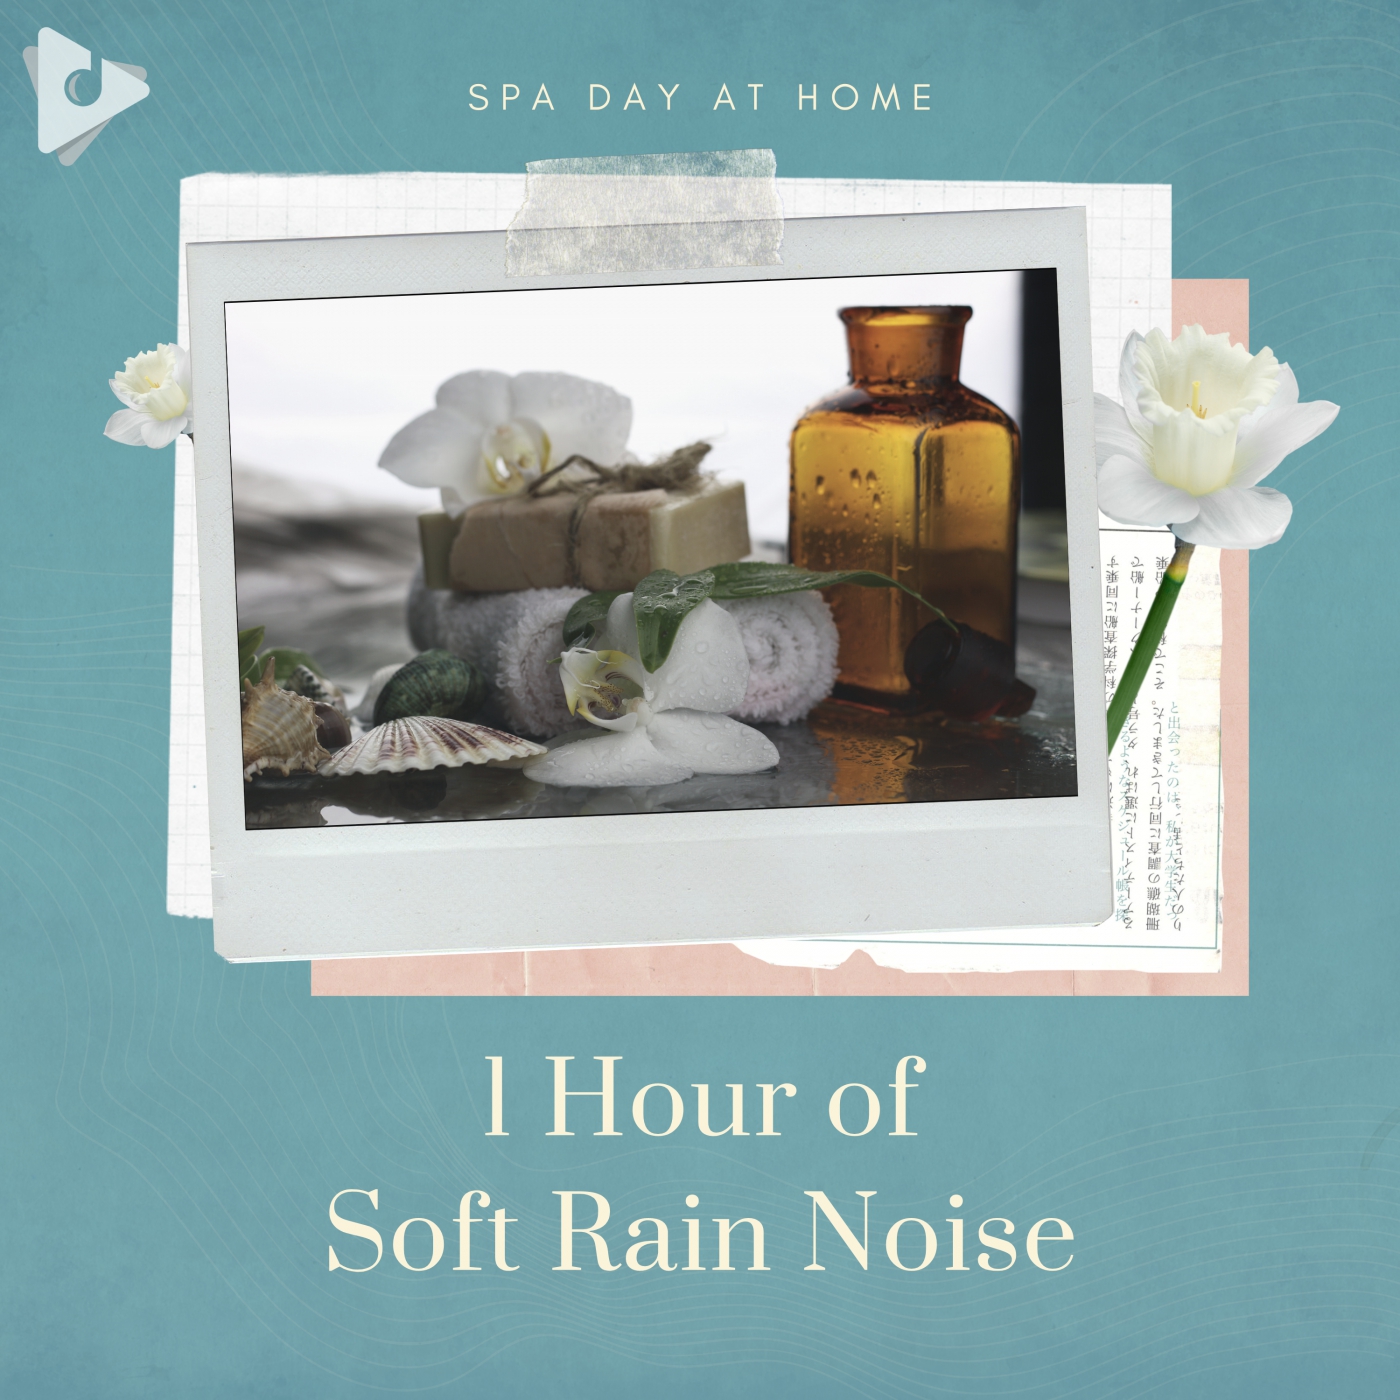 1 Hour of Soft Rain Noise